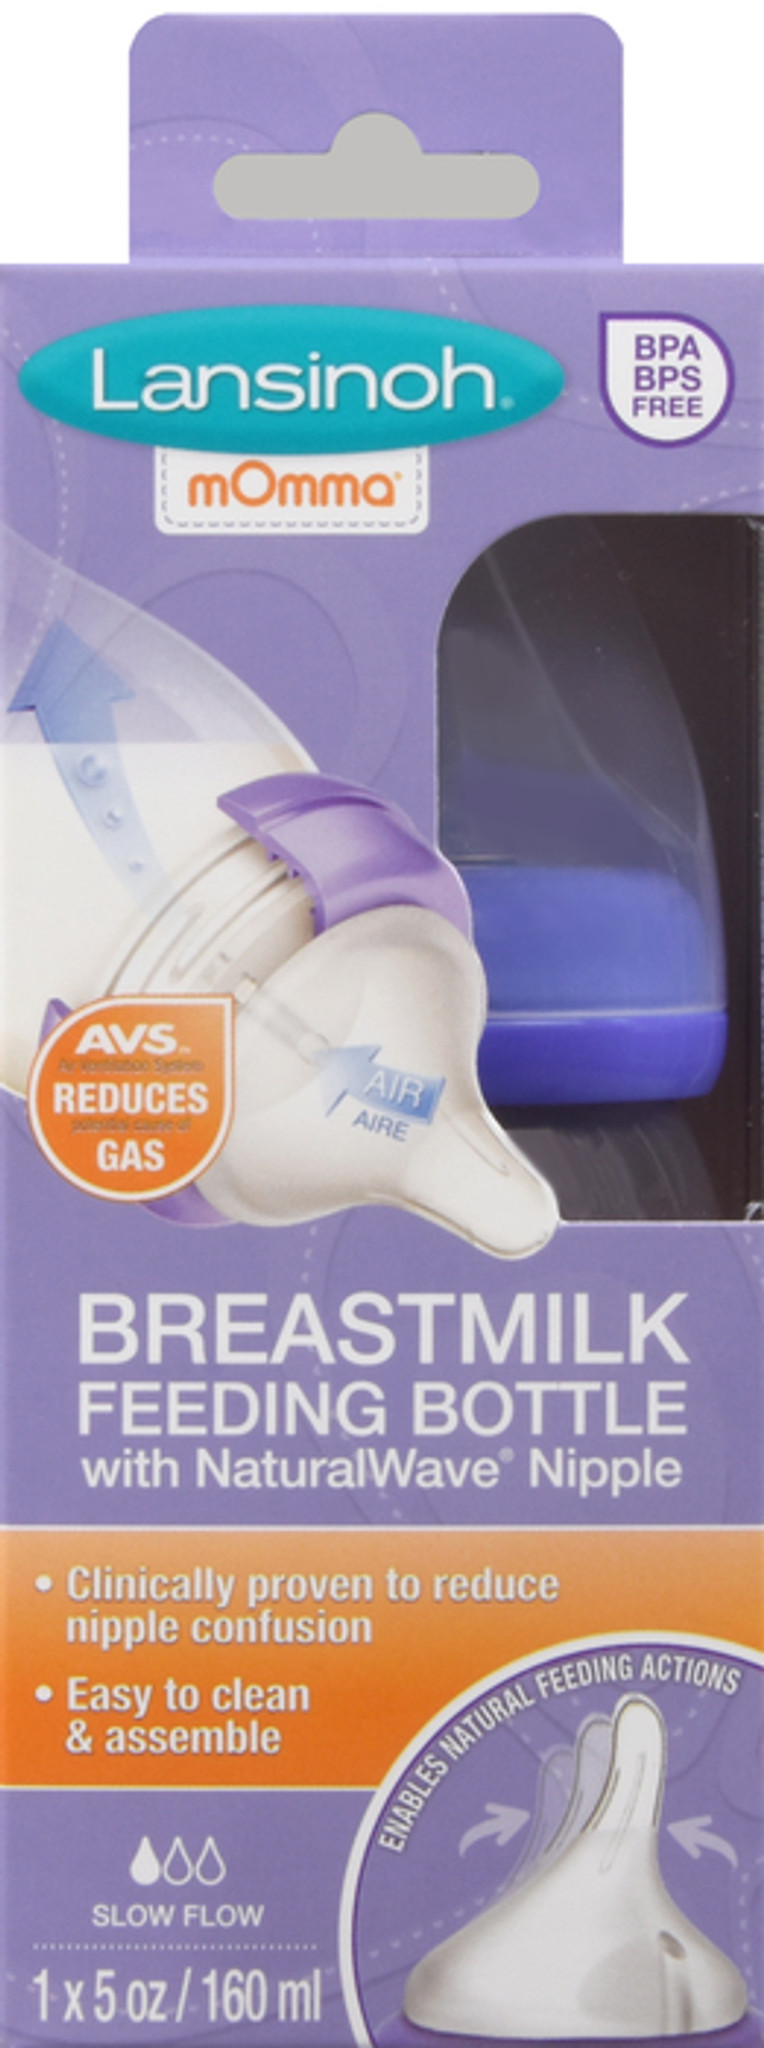 Lansinoh Momma Breastmilk Feeding Bottle with NaturalWave Slow